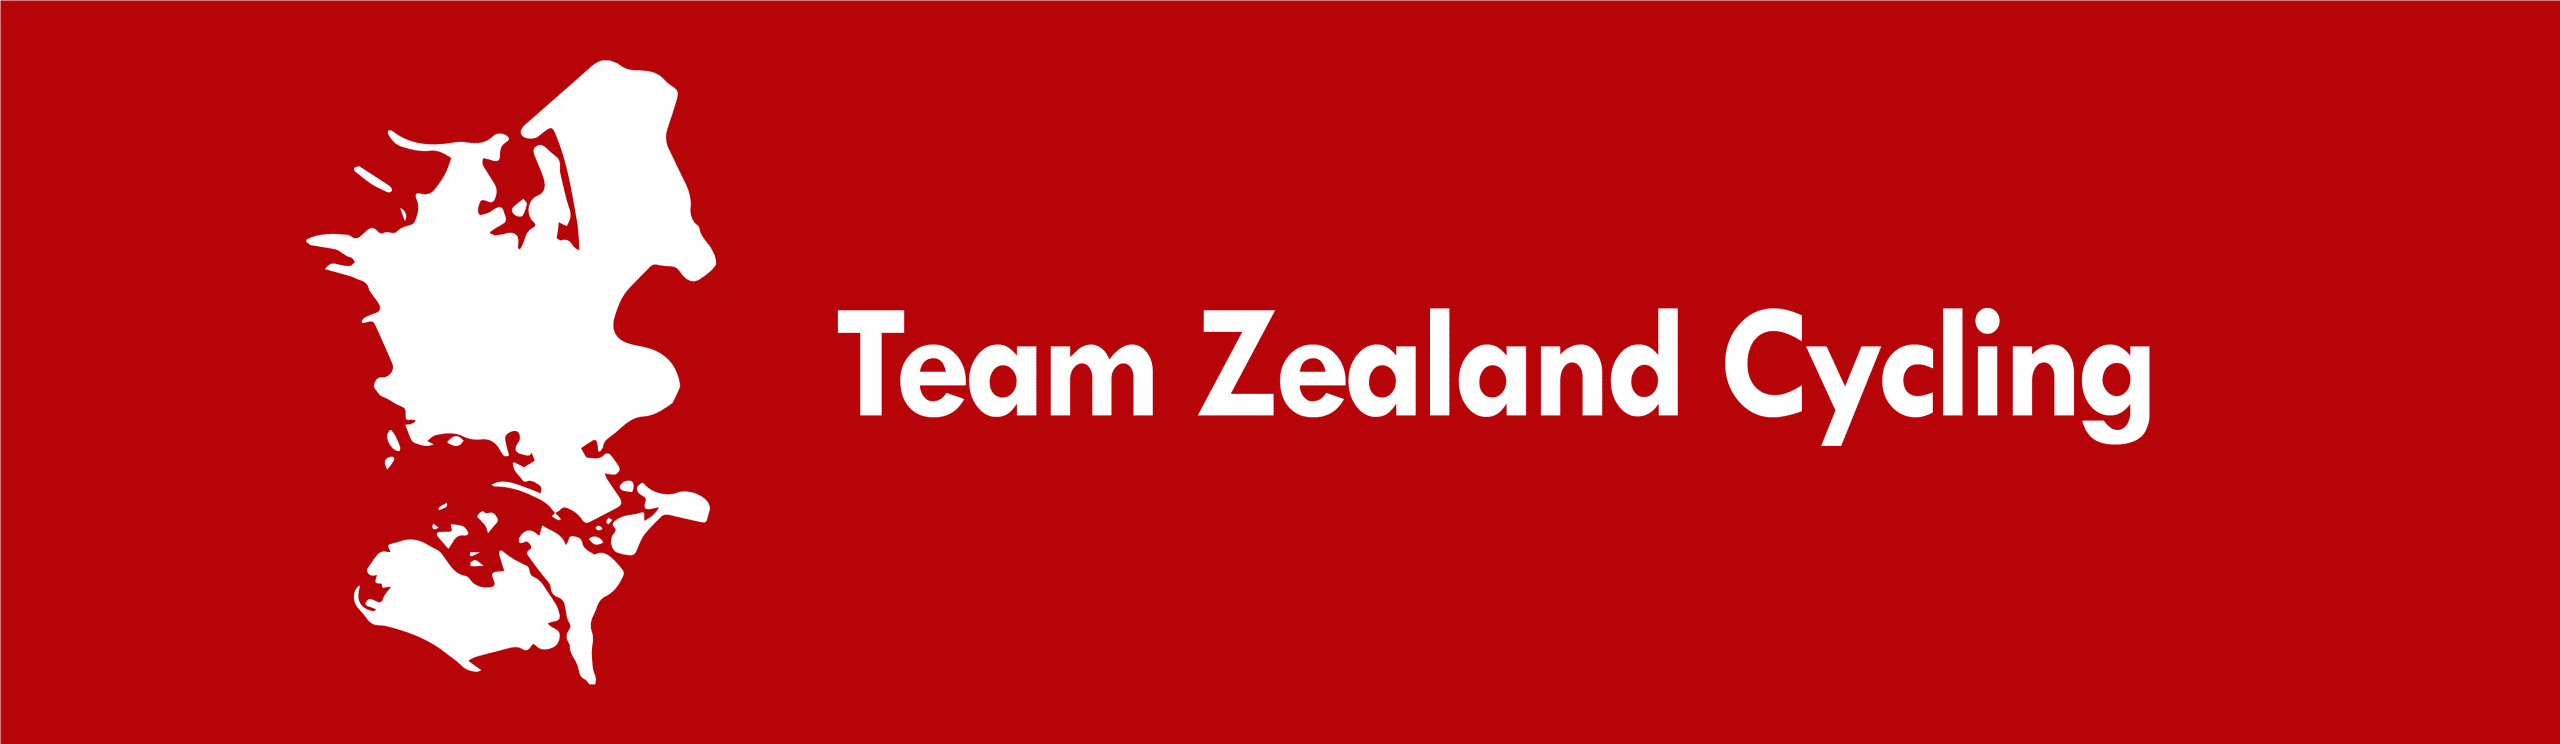 Team  Zealand Cycling